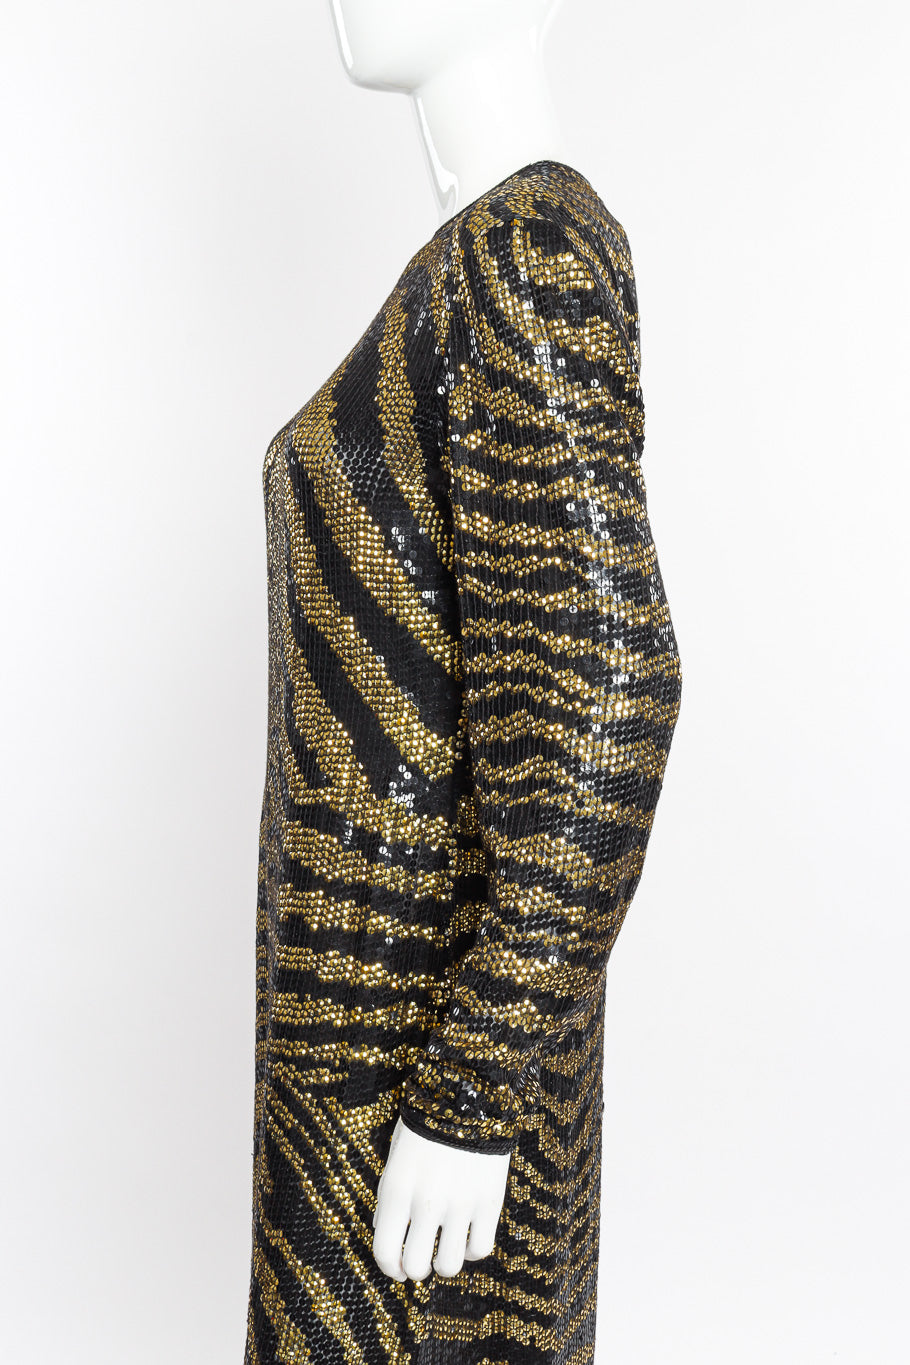 Vintage Halston Tiger Sequin Sheath Gown side view on mannequin closeup @recessla